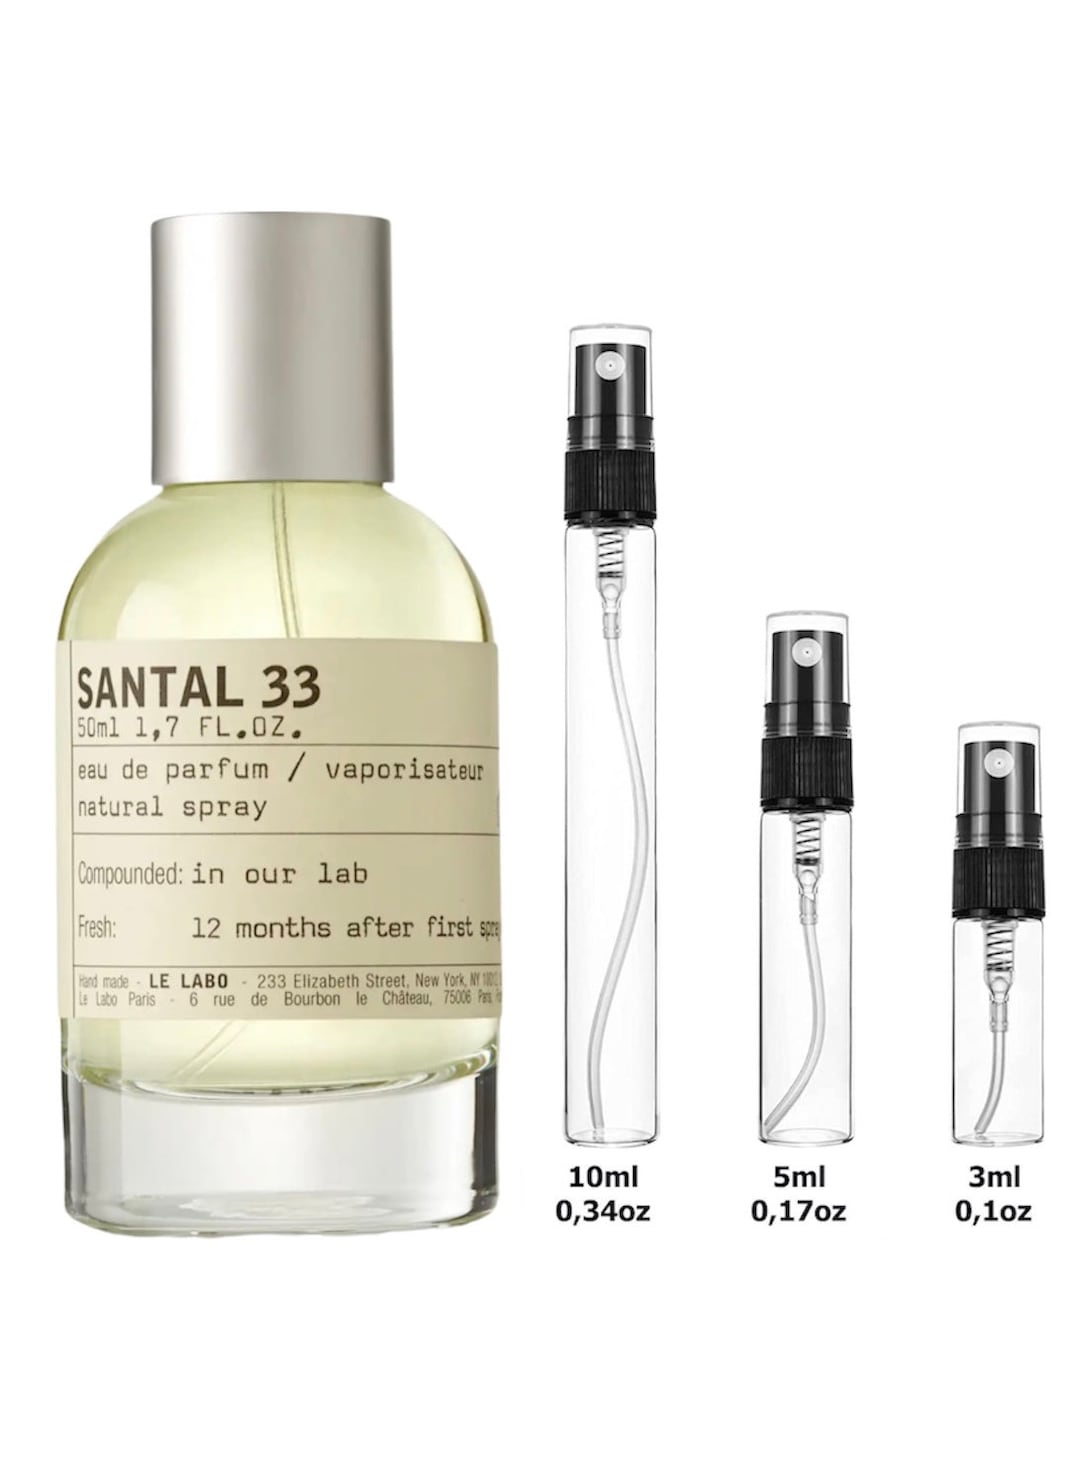 Why use alcohol inside perfume? – Oo La Lab